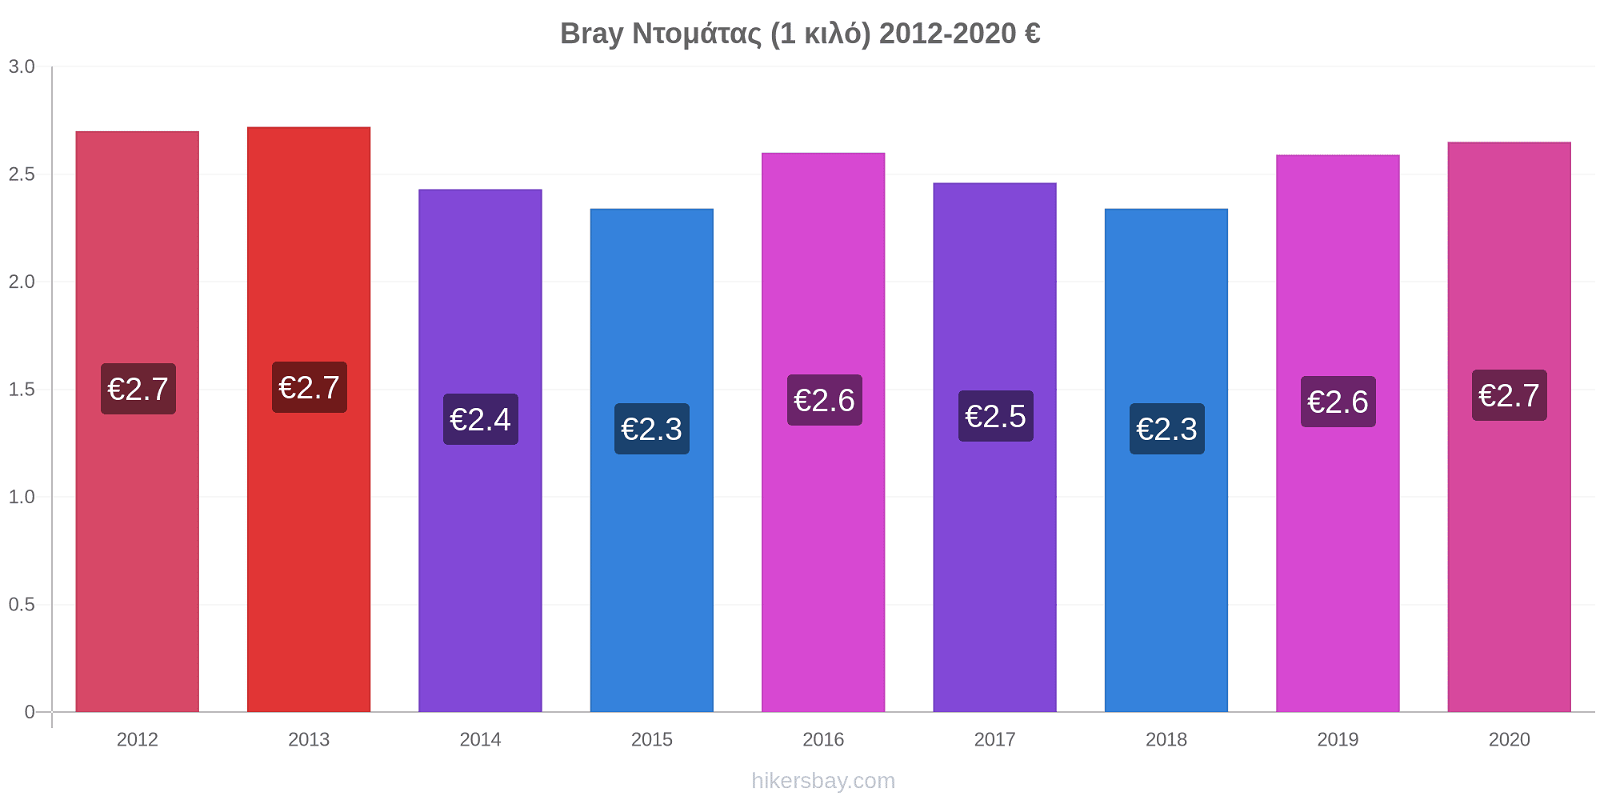 Bray αλλαγές τιμών Ντομάτας (1 κιλό) hikersbay.com